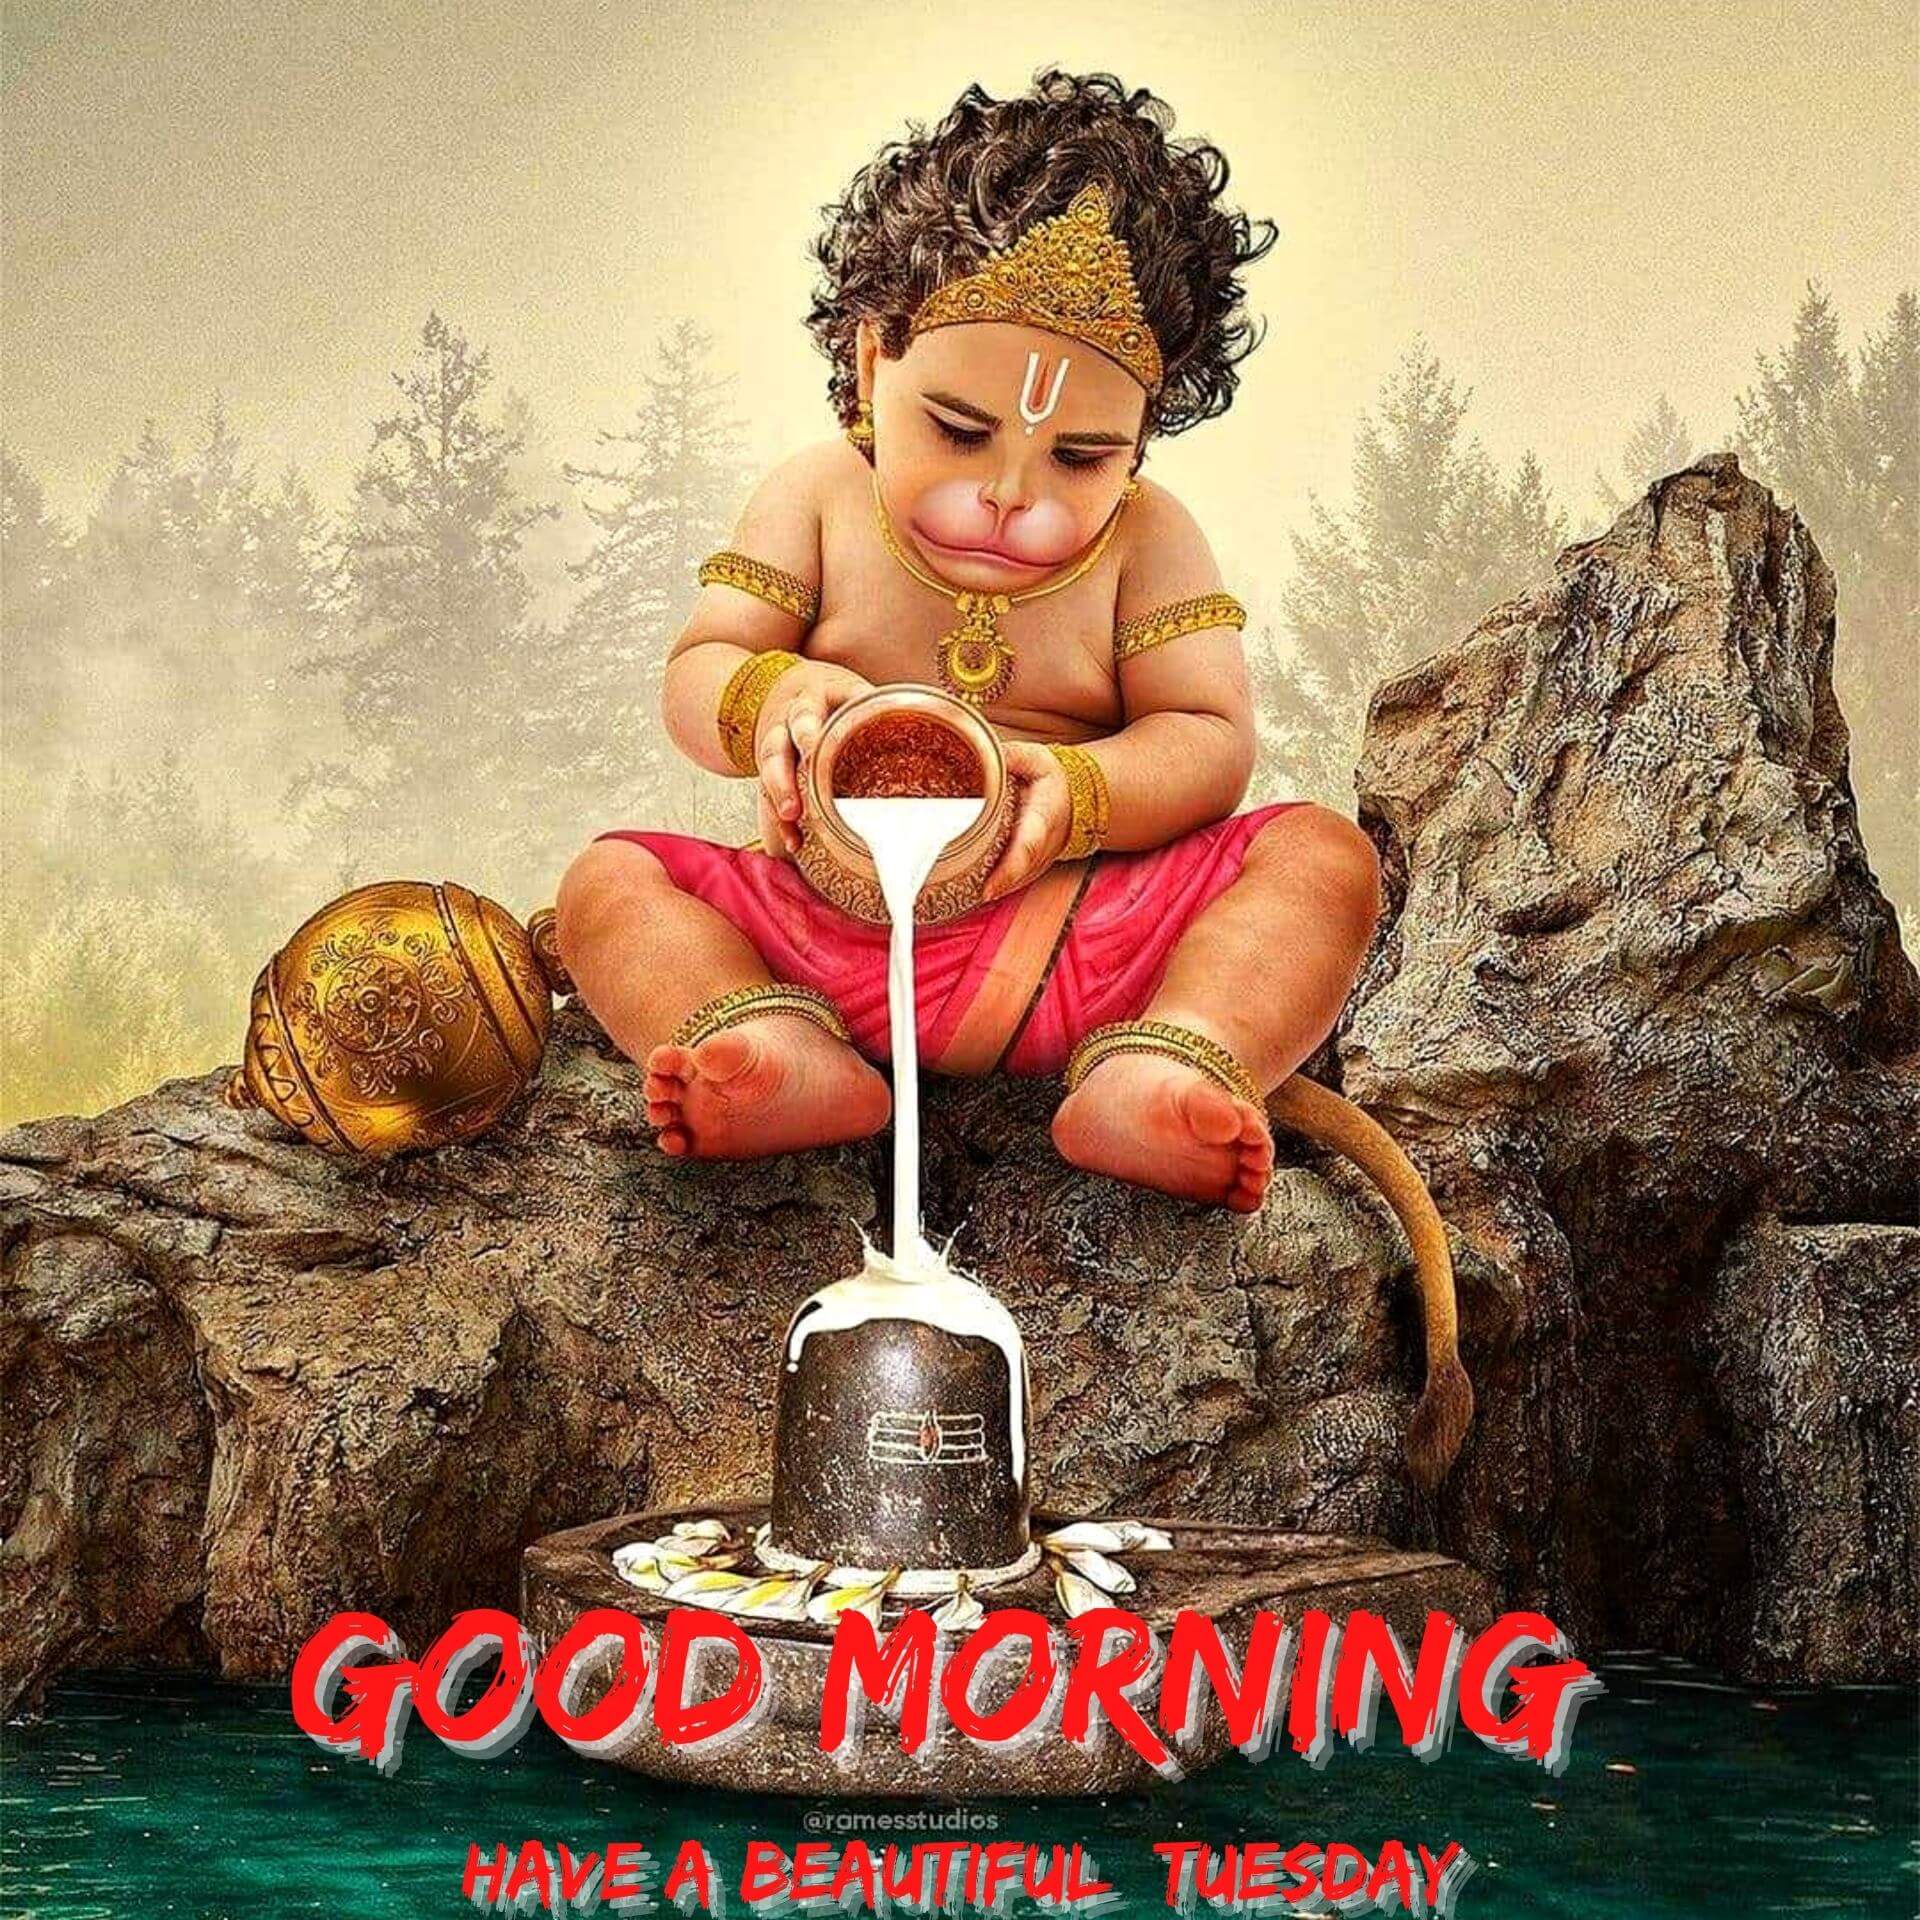 New HD Tuesday good morning Wallpaper With Hanuman JI